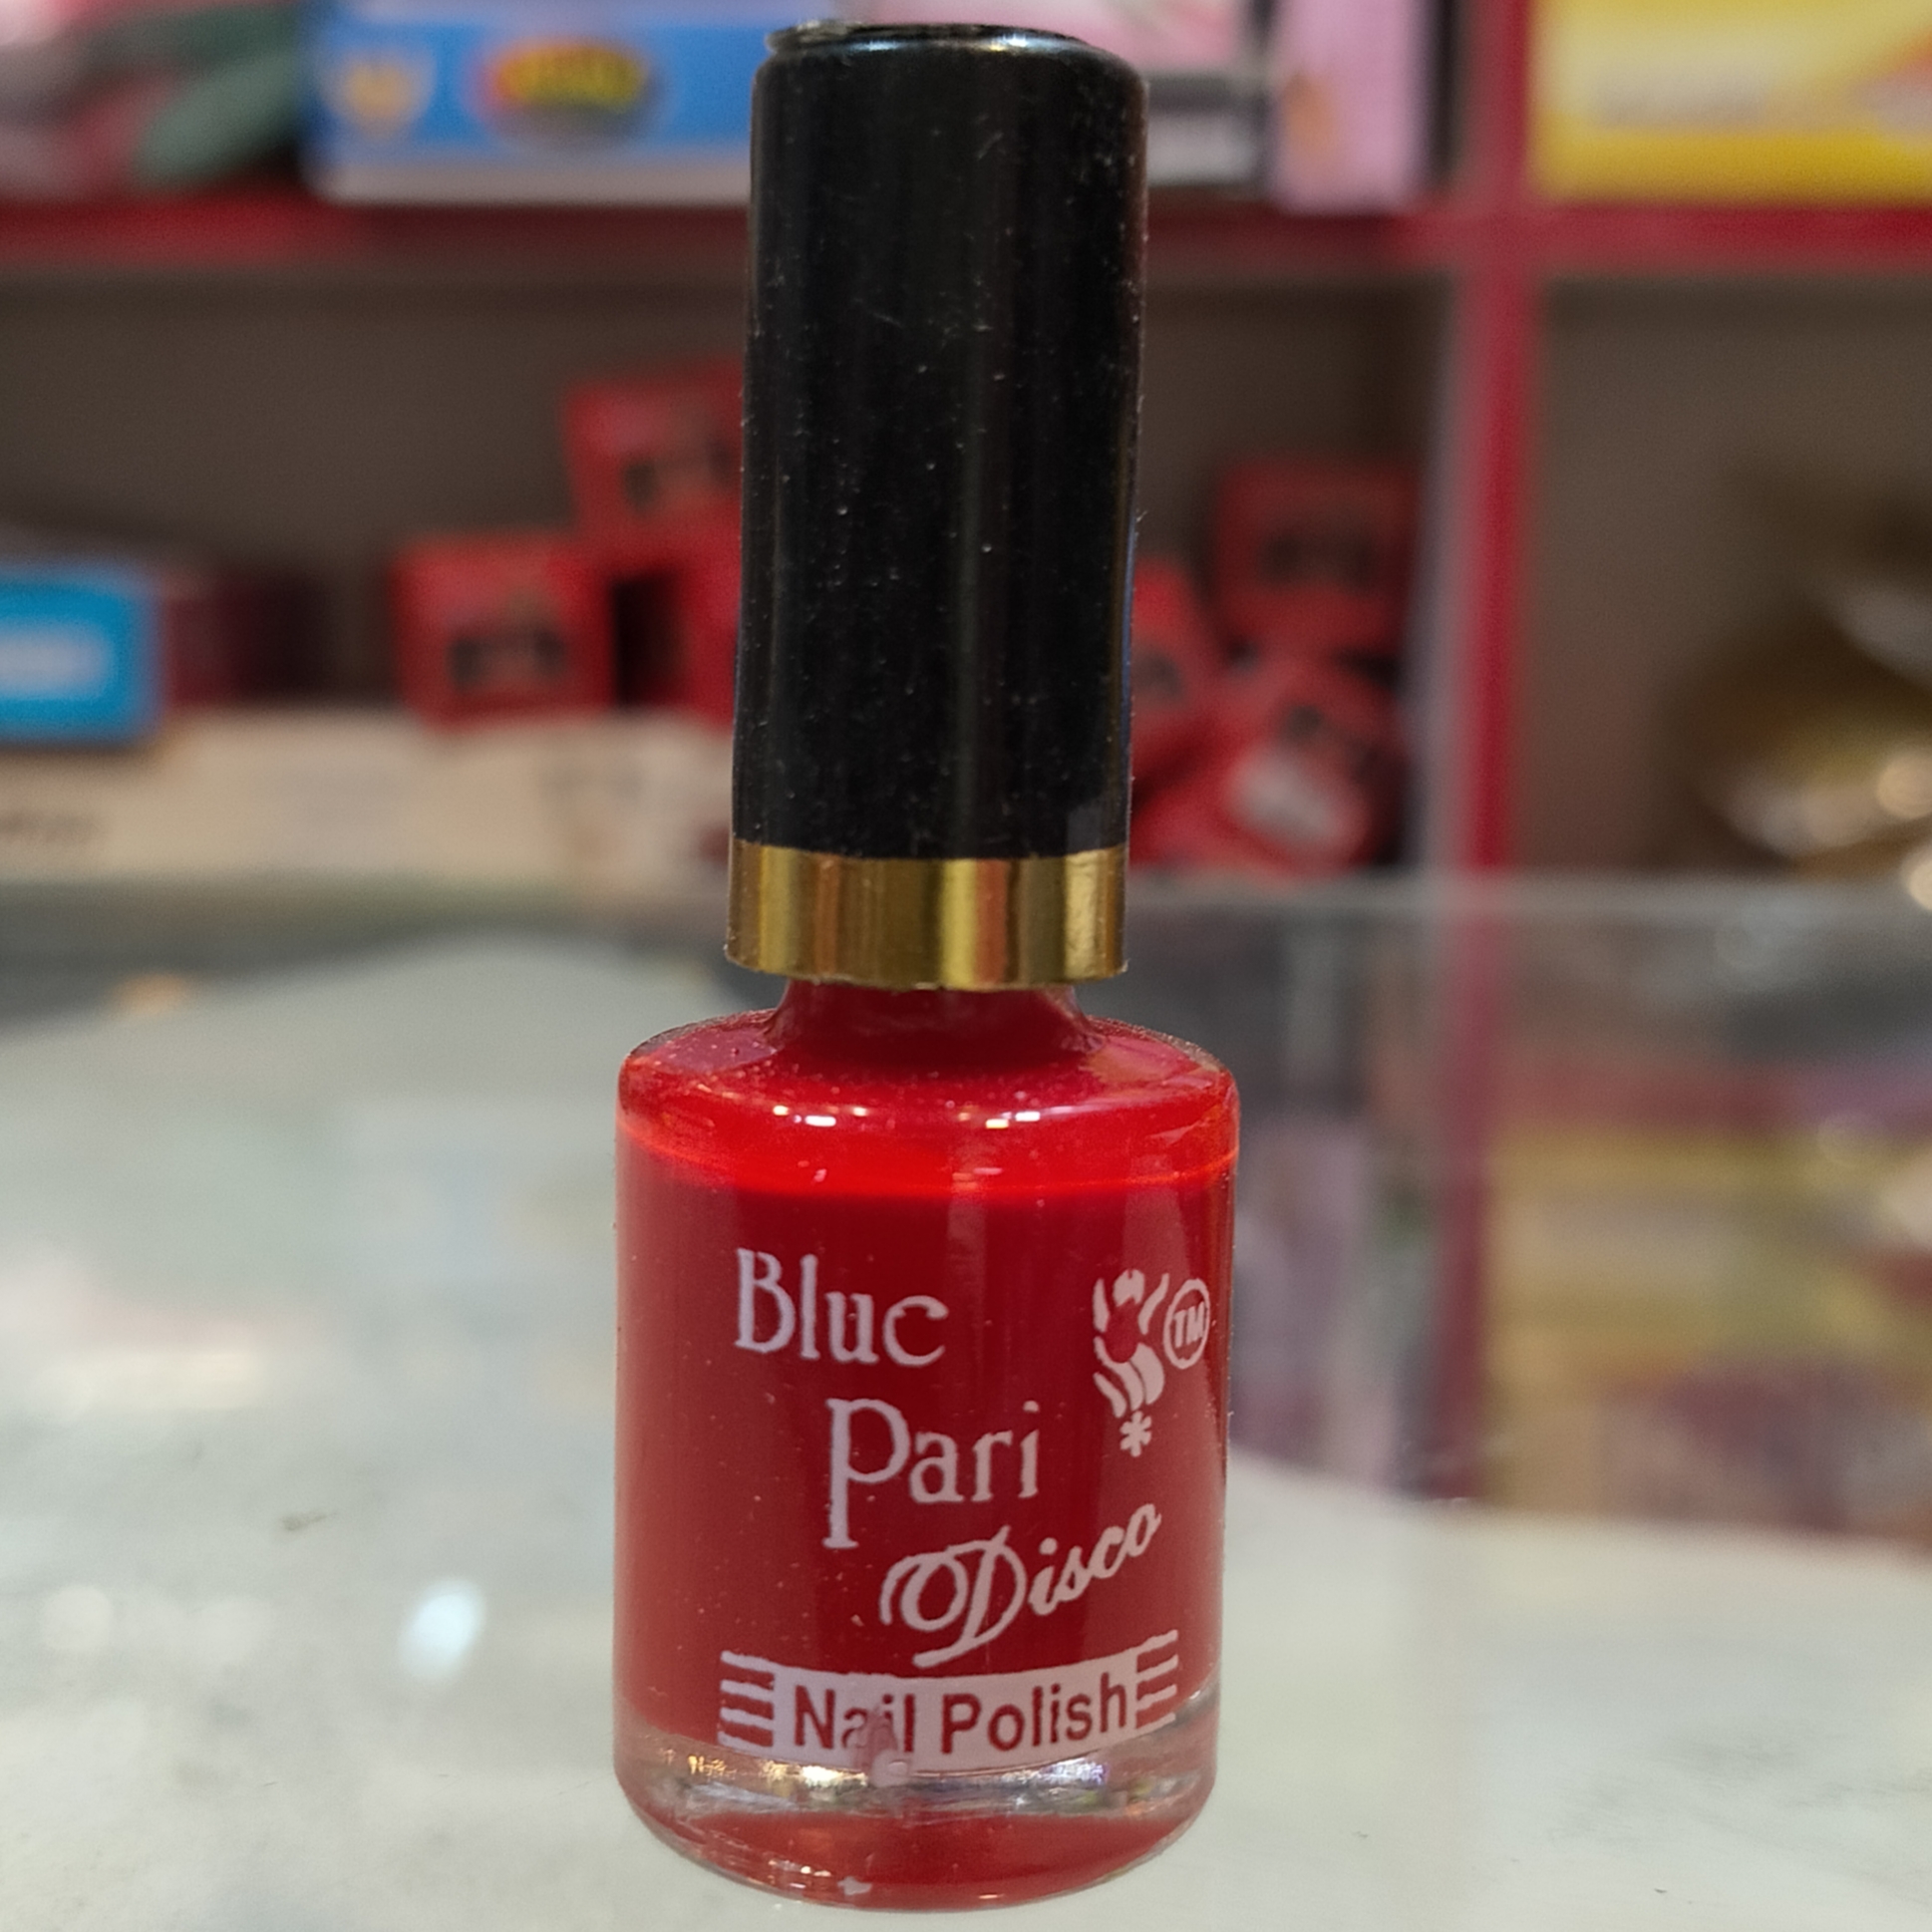 Blue Pari Disco Nail Paint Per Box 12 Pic - Red